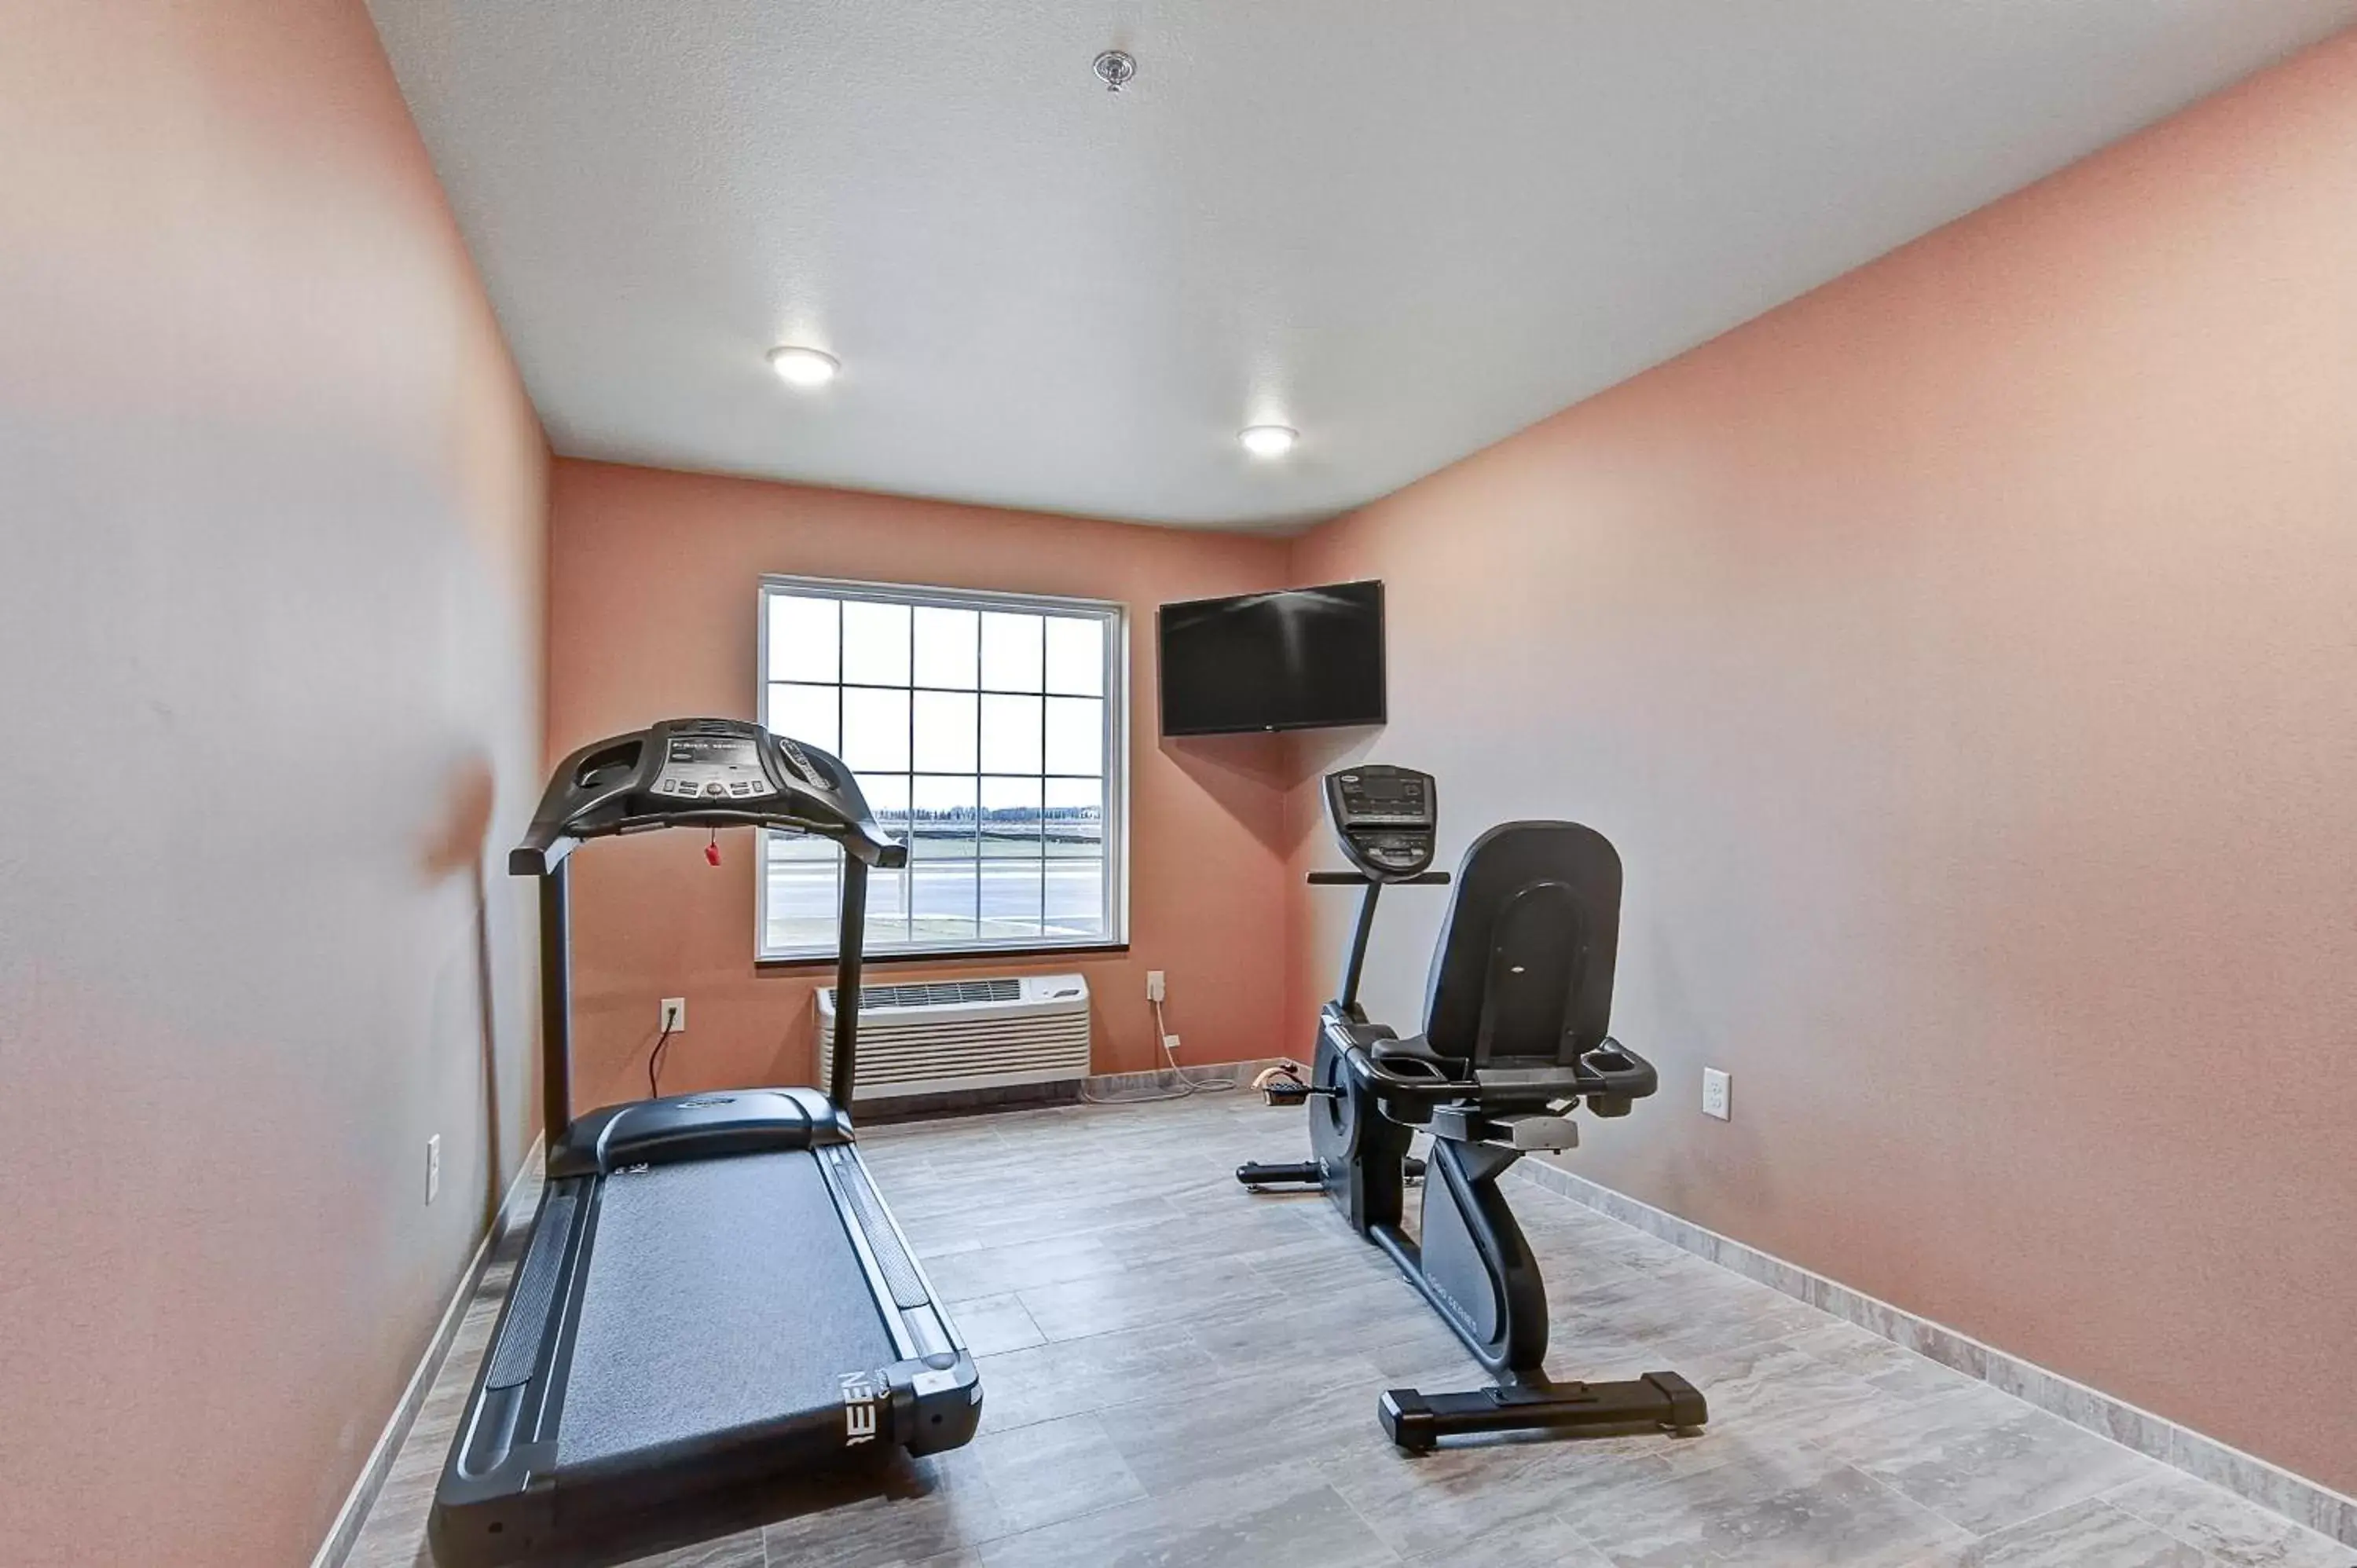 Fitness centre/facilities, Fitness Center/Facilities in Cobblestone Hotel & Suites Pulaski/Green Bay